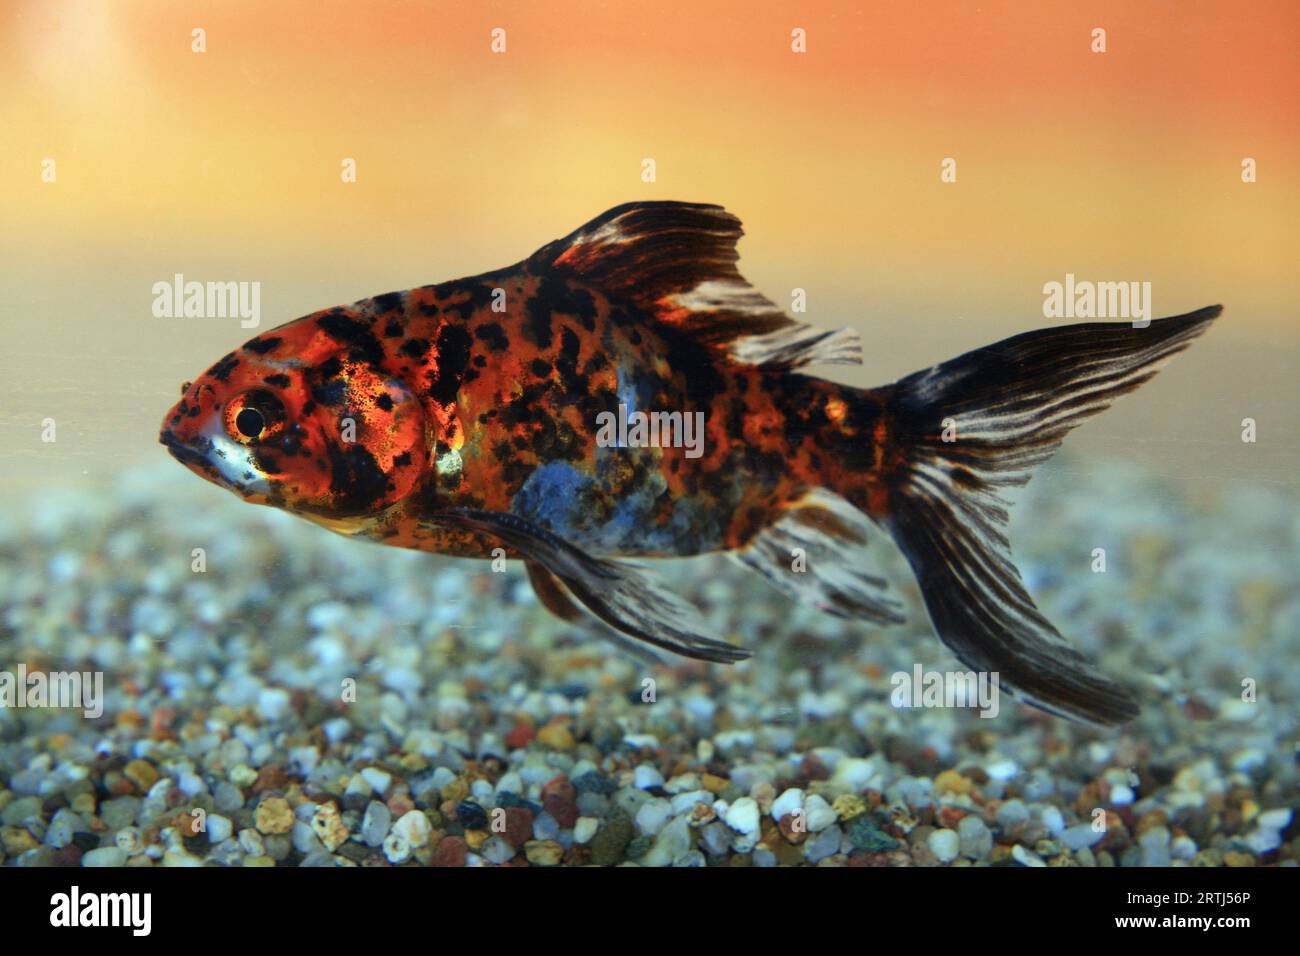 Shubunkin goldfish (Carassius auratus), goldfish Stock Photo